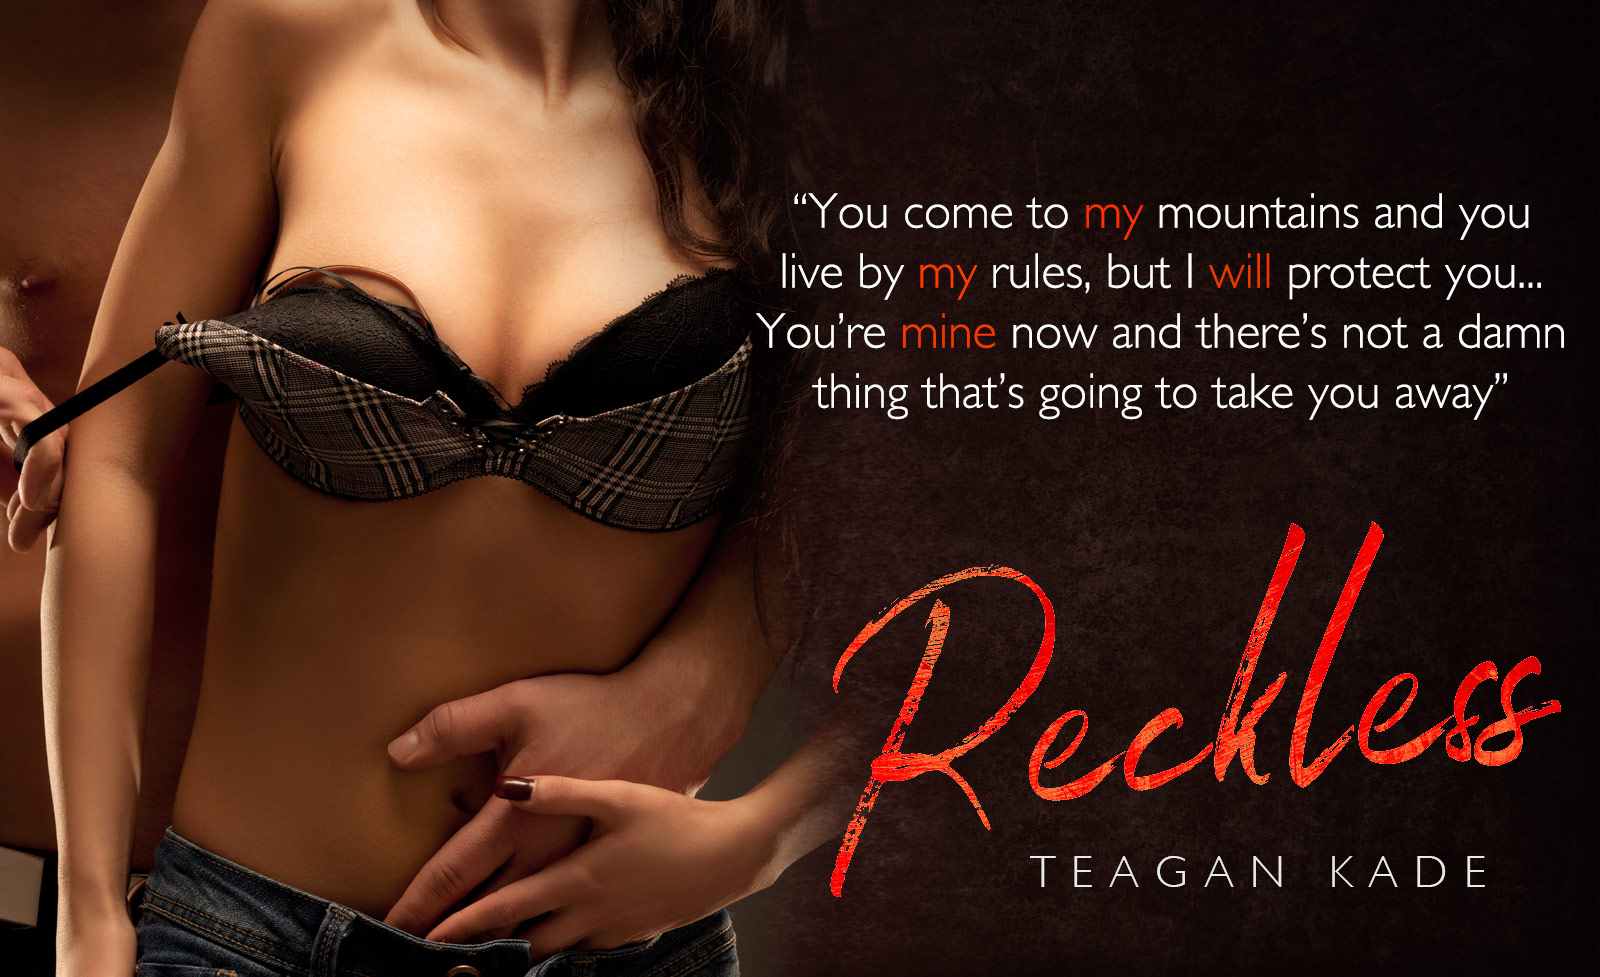 Tegan Kade Reckless Cover Reveal pic